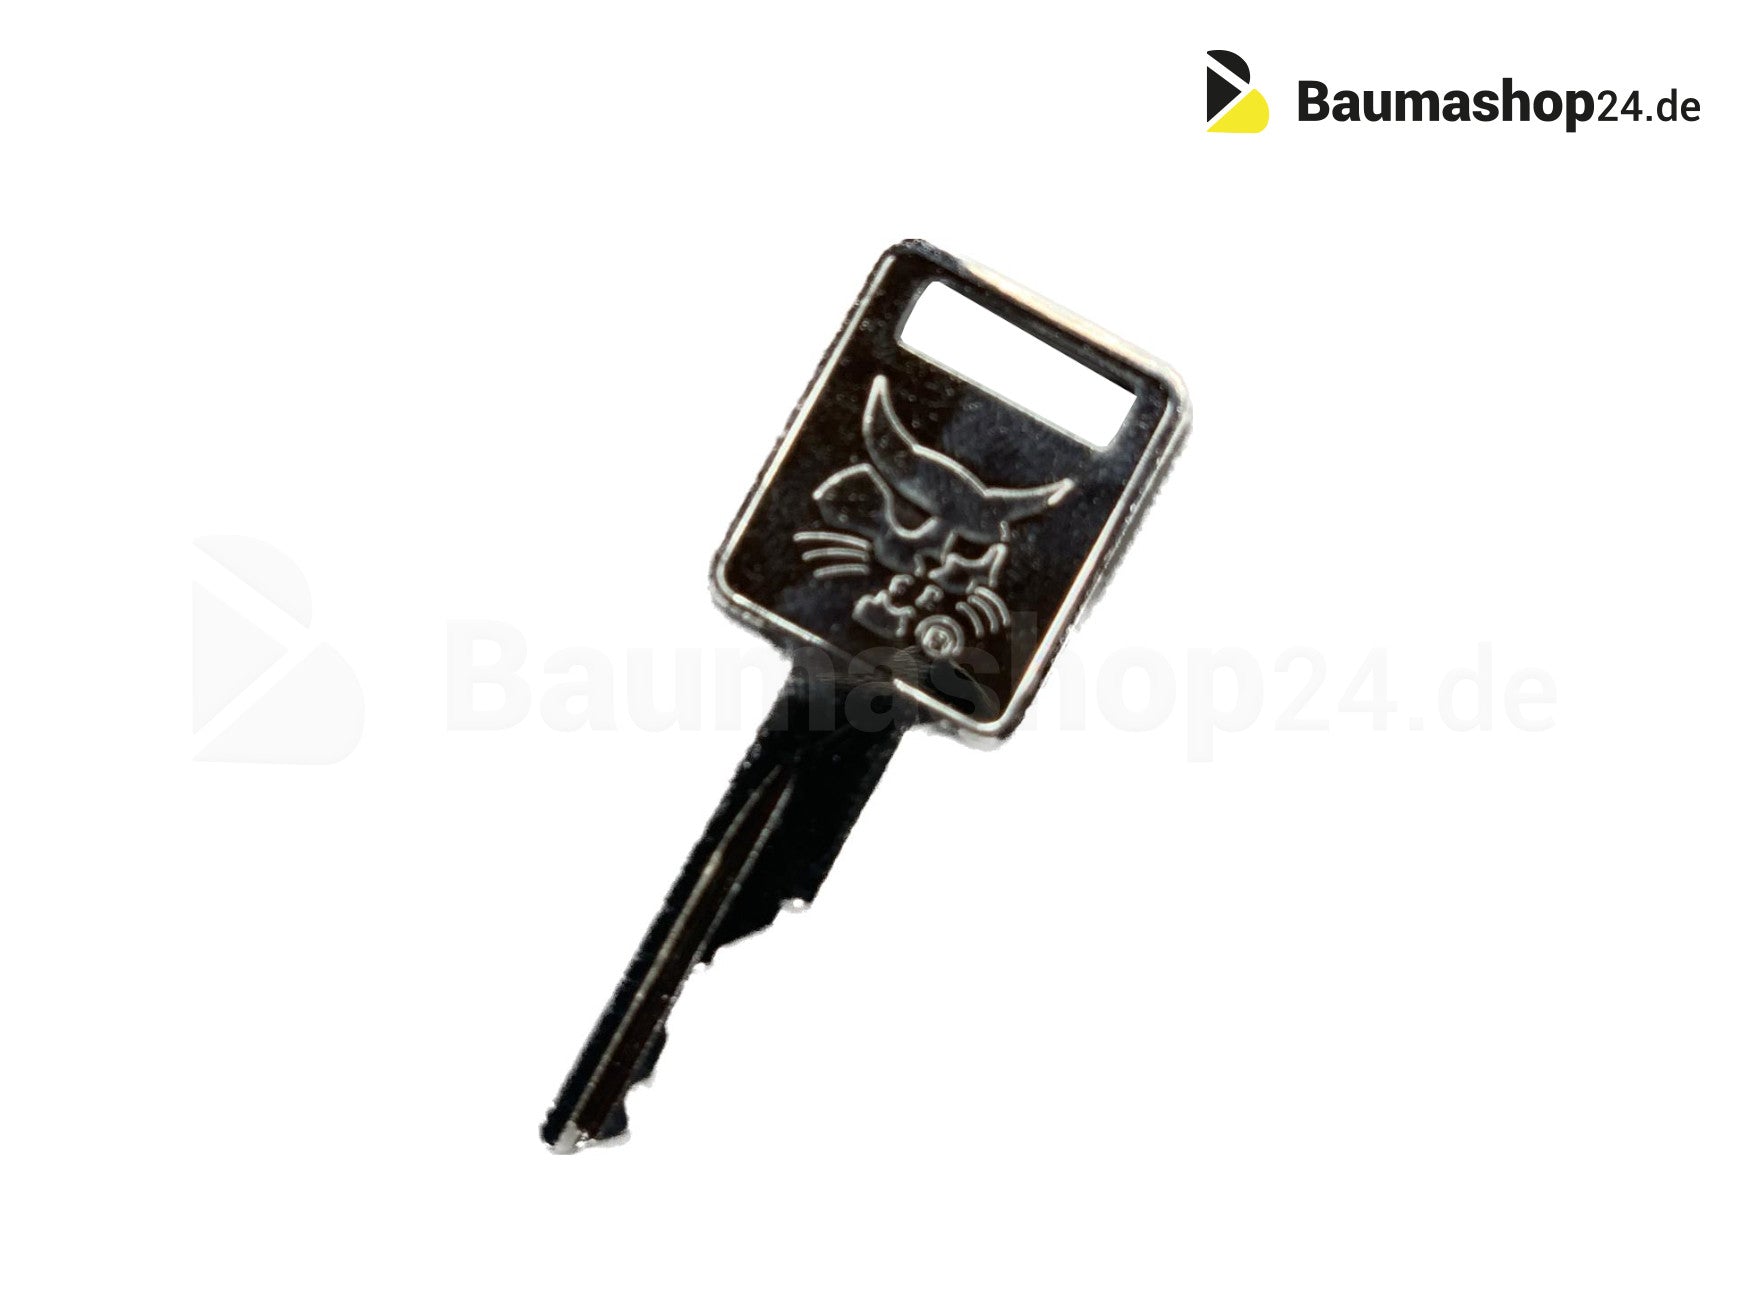 Bobcat Ersatzschlüssel 7006802 – Baumashop24